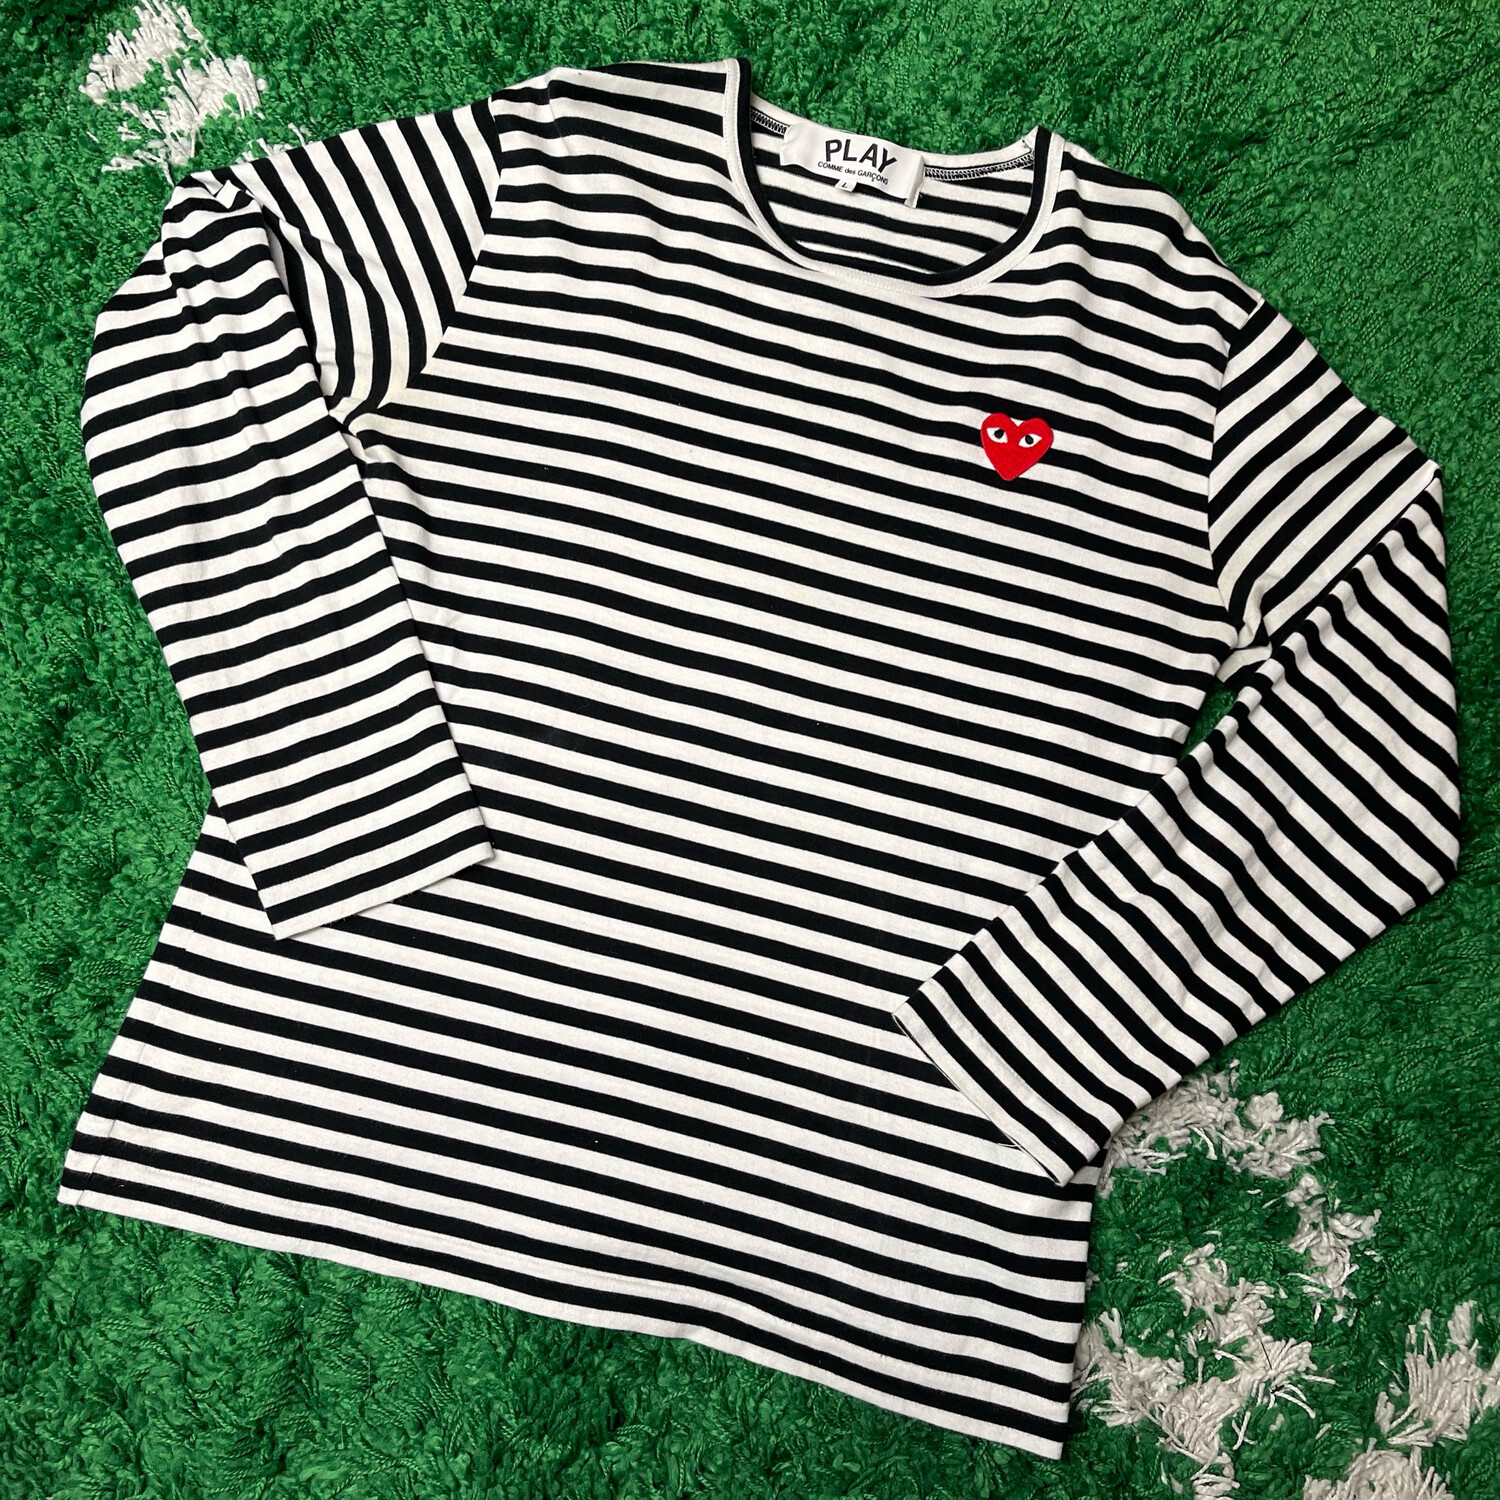 CDG Striped Long Sleeve Shirt Size Large